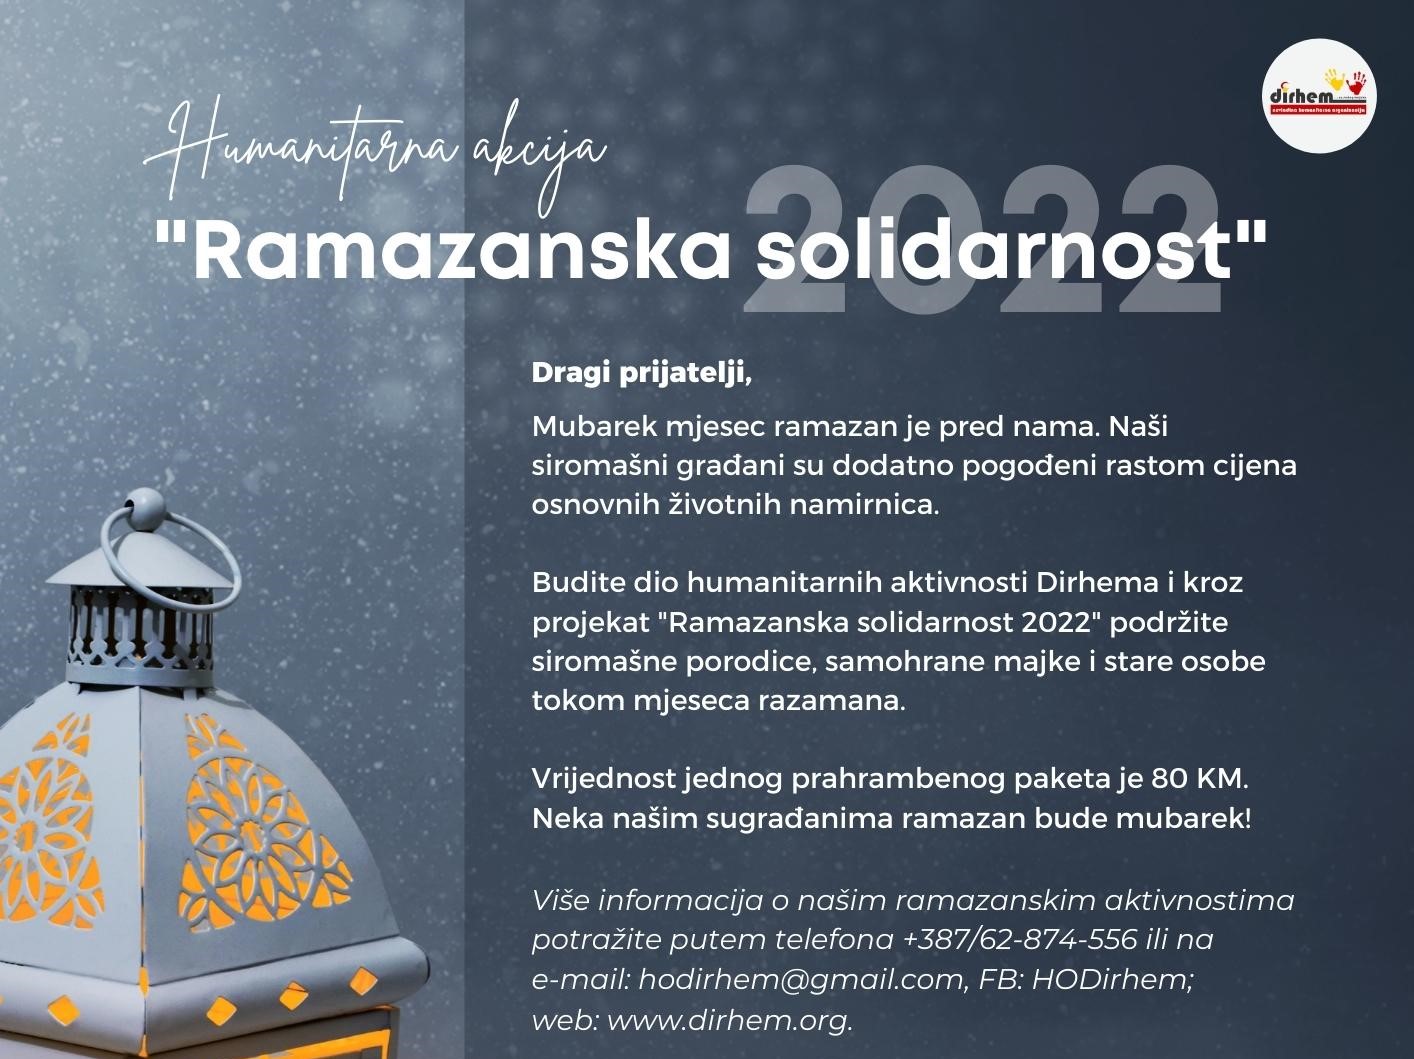 You are currently viewing Humanitarna akcija “Ramazanska solidarnost 2022”